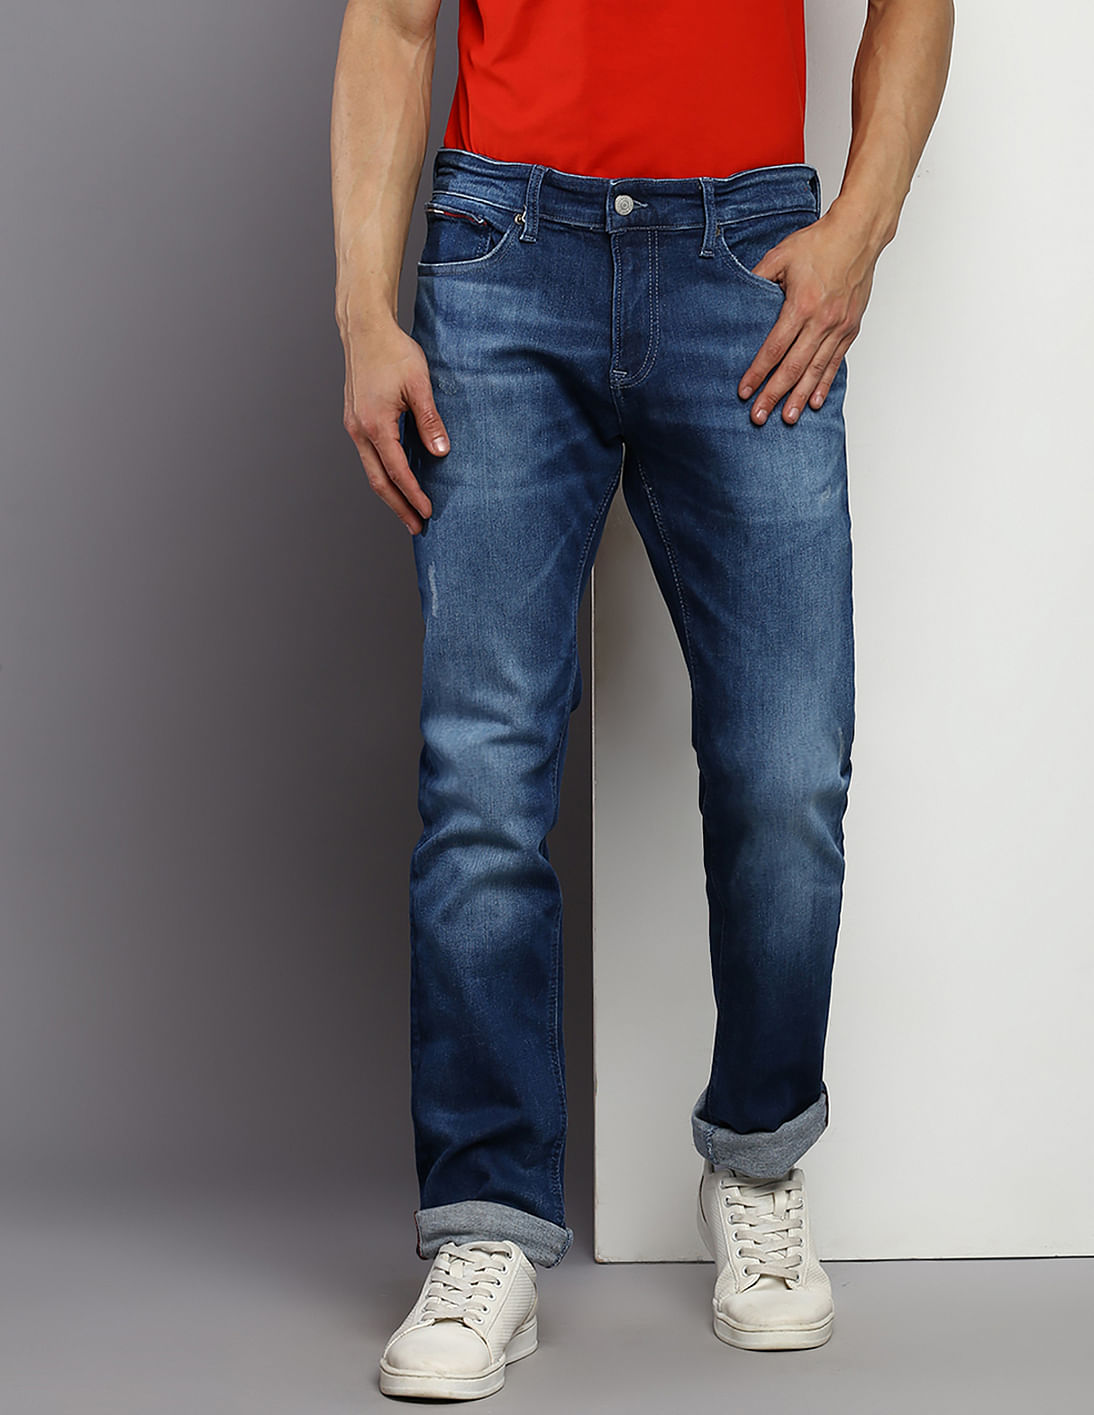 Hilfiger Buy Fit Scanton Slim Wash Tommy Dark Jeans